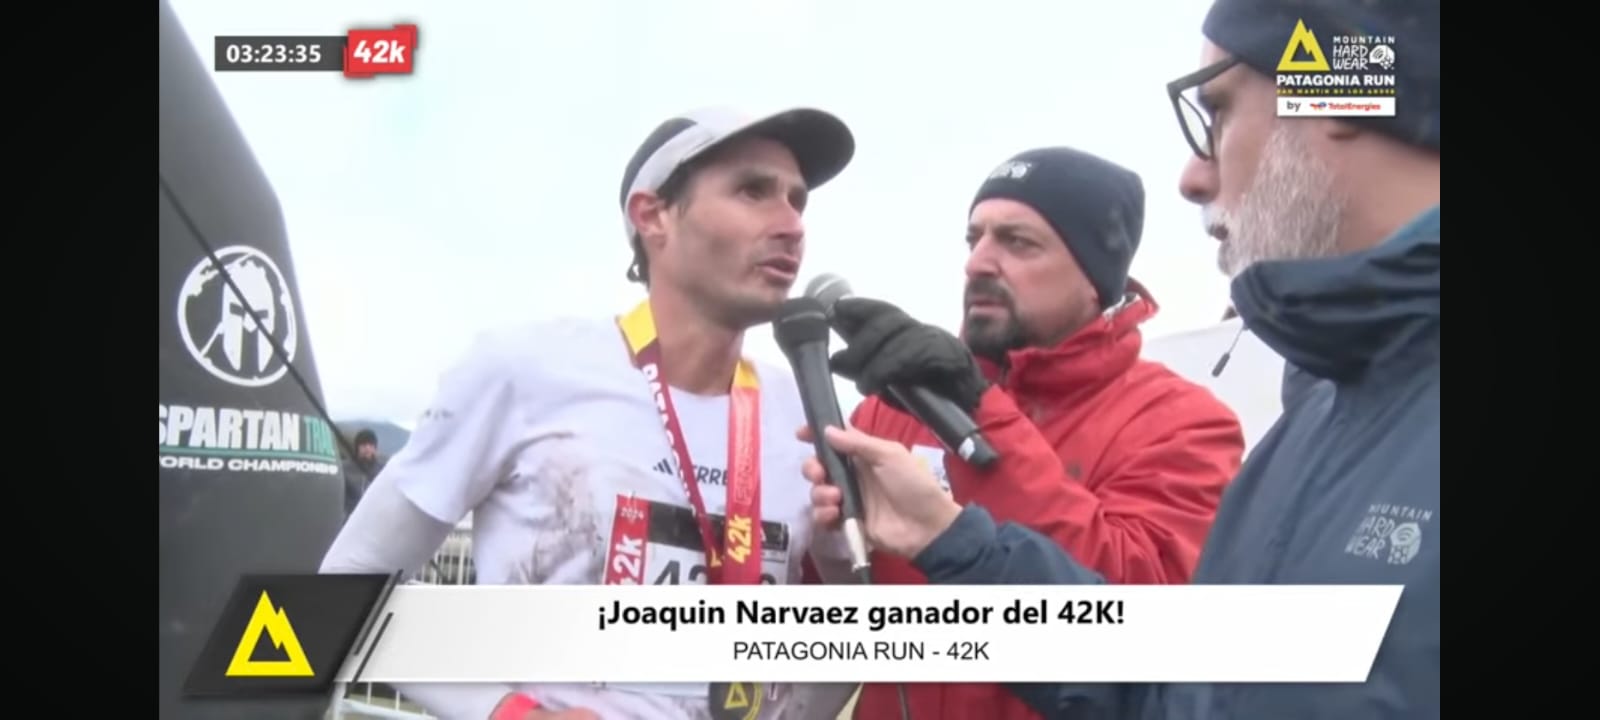 Patagonia Run: Joaquín Narváez gana los 42k